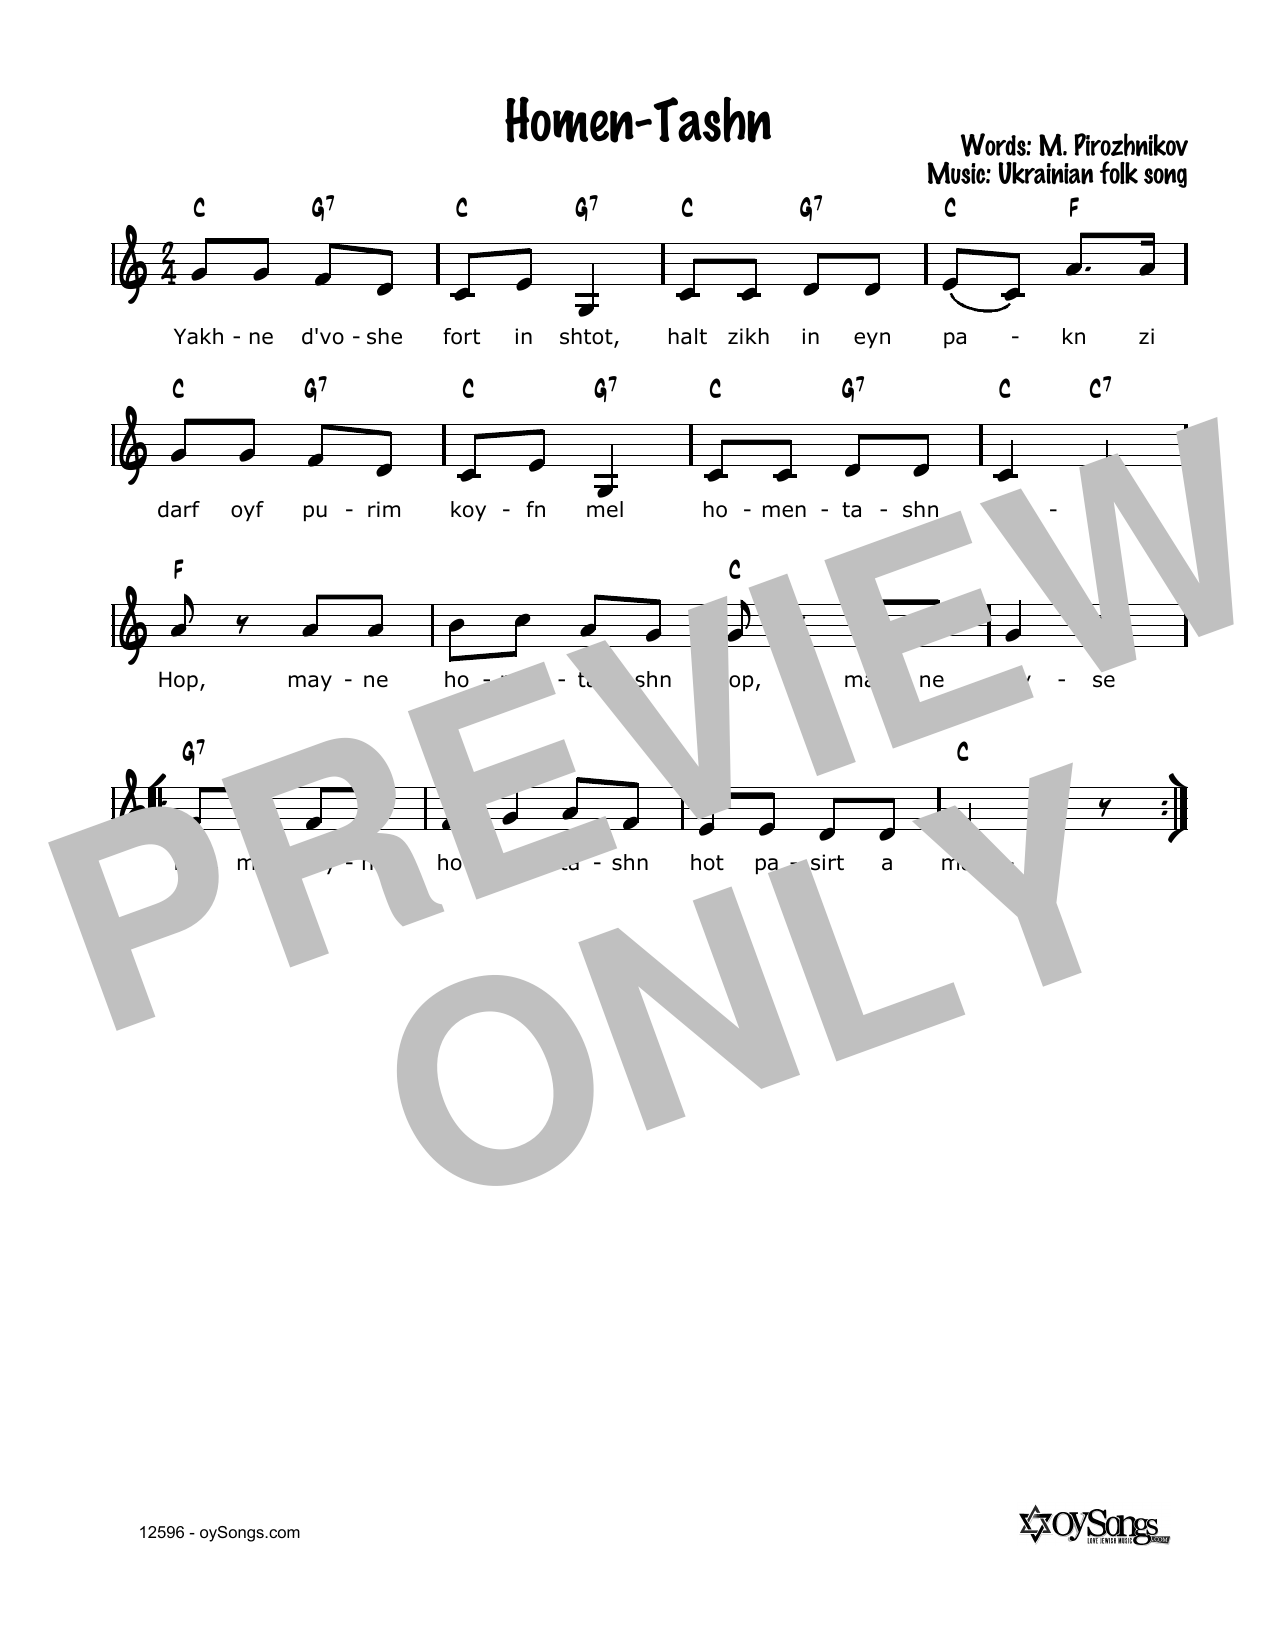 Cindy Paley Homen-Tashn Sheet Music Notes & Chords for Melody Line, Lyrics & Chords - Download or Print PDF